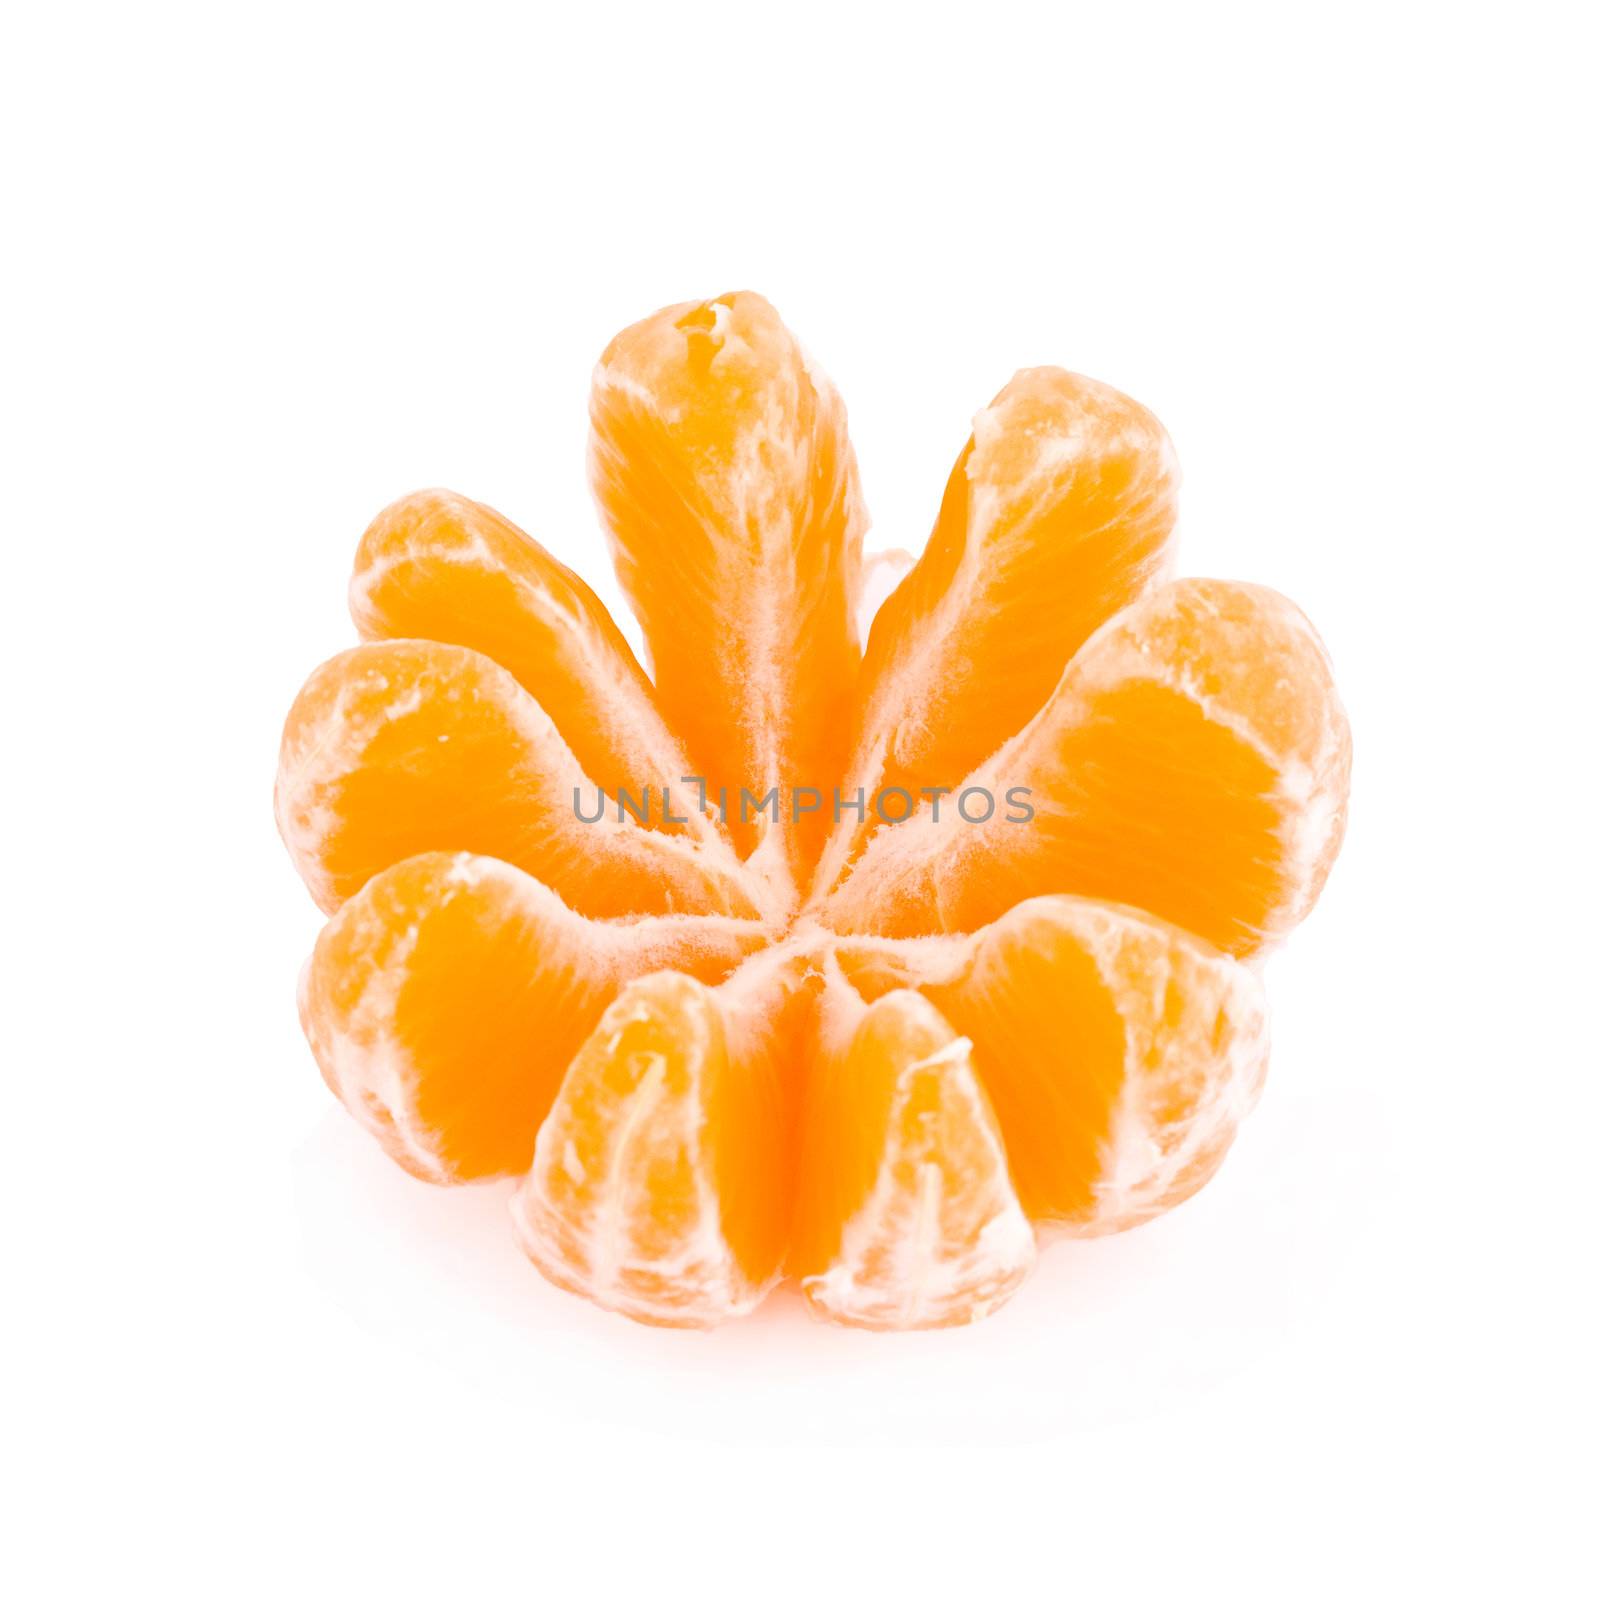 Mandarine fruit by Gbuglok